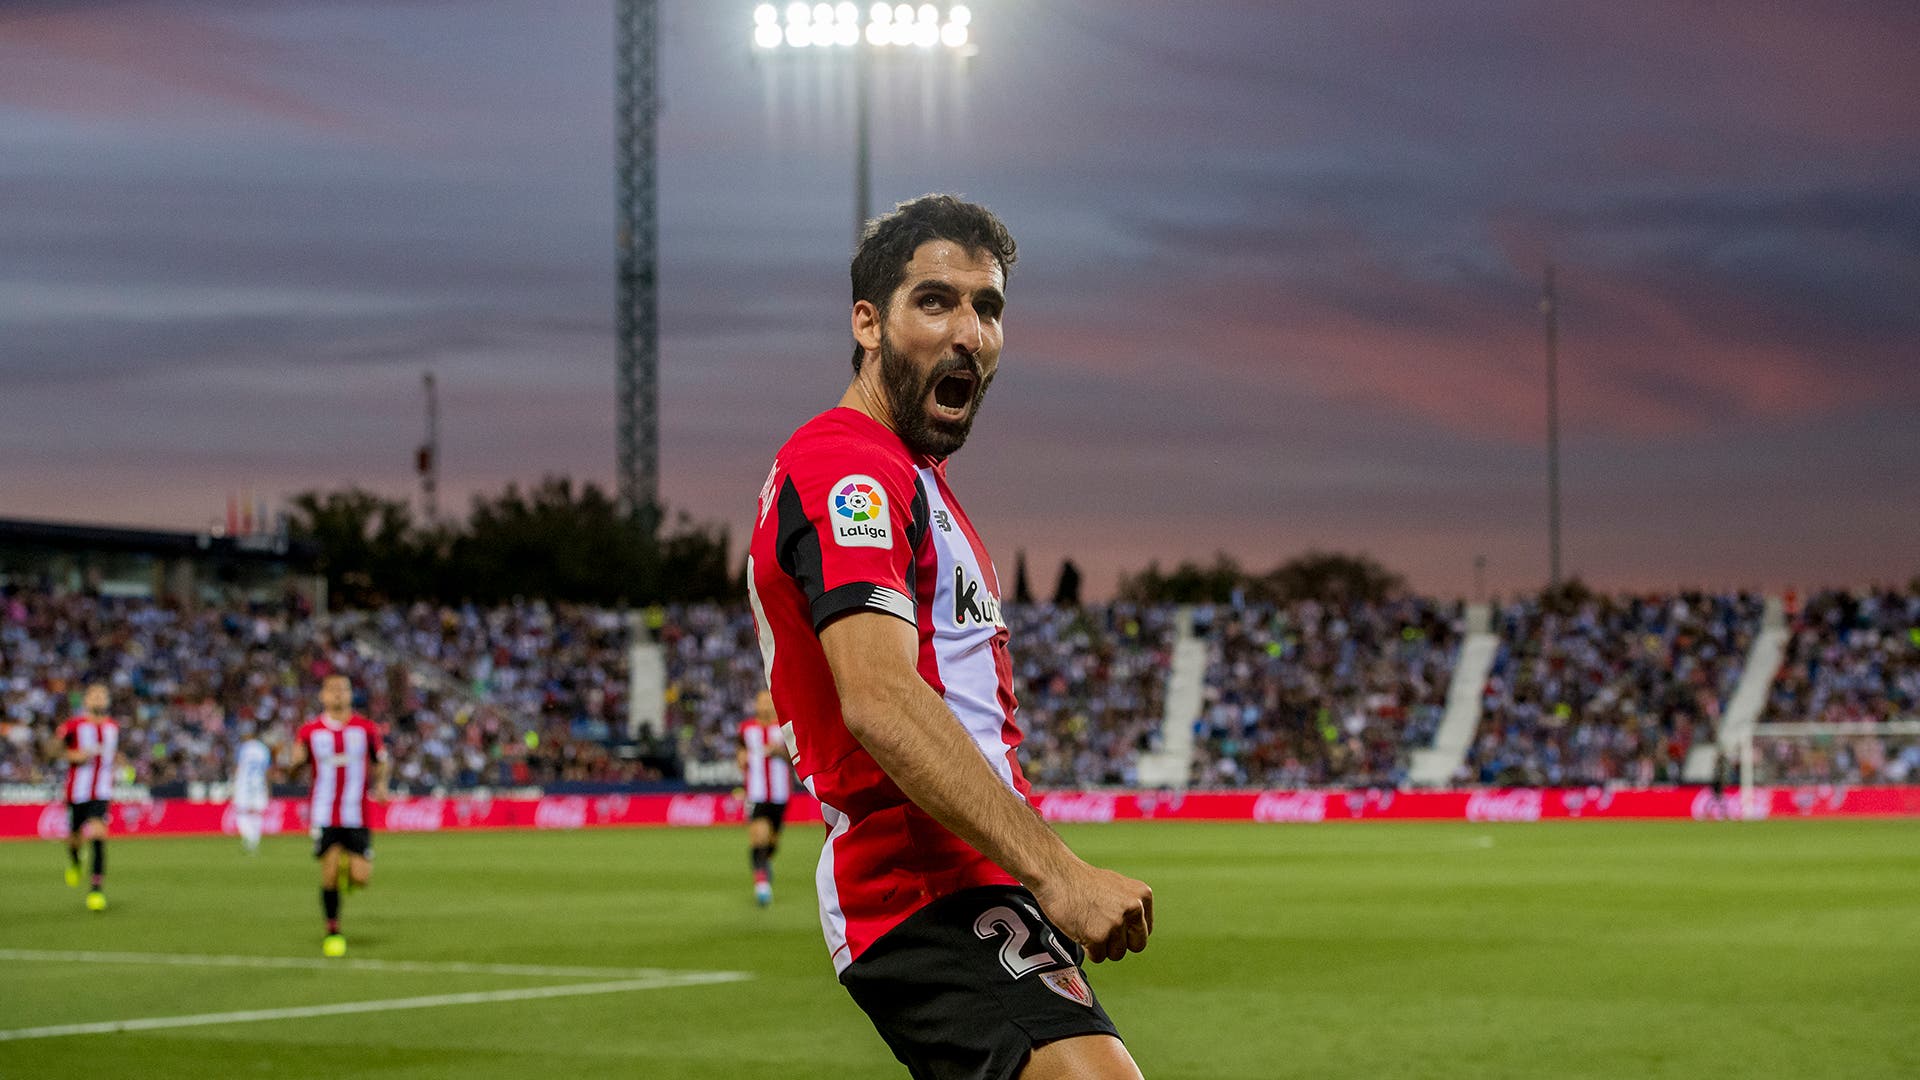 Raúl García says goodbye to Athletic
	
